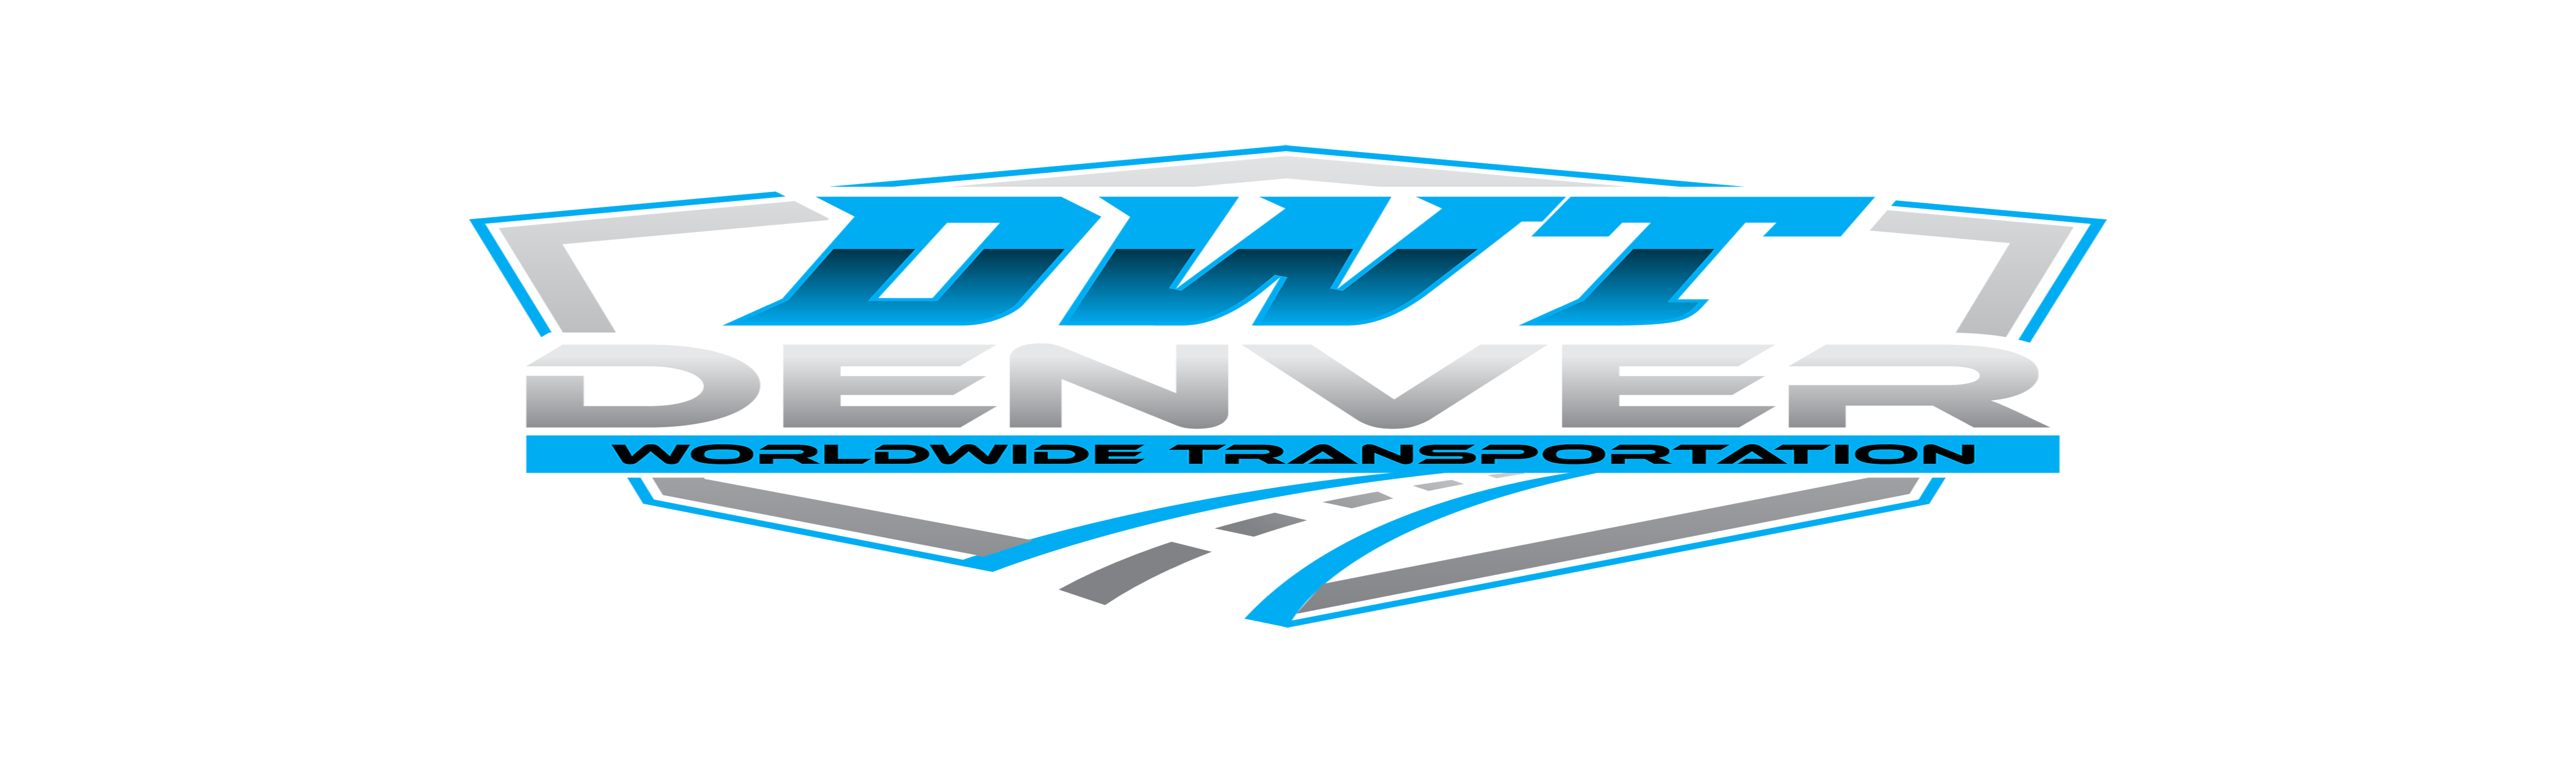 Denver Worldwide Transportation